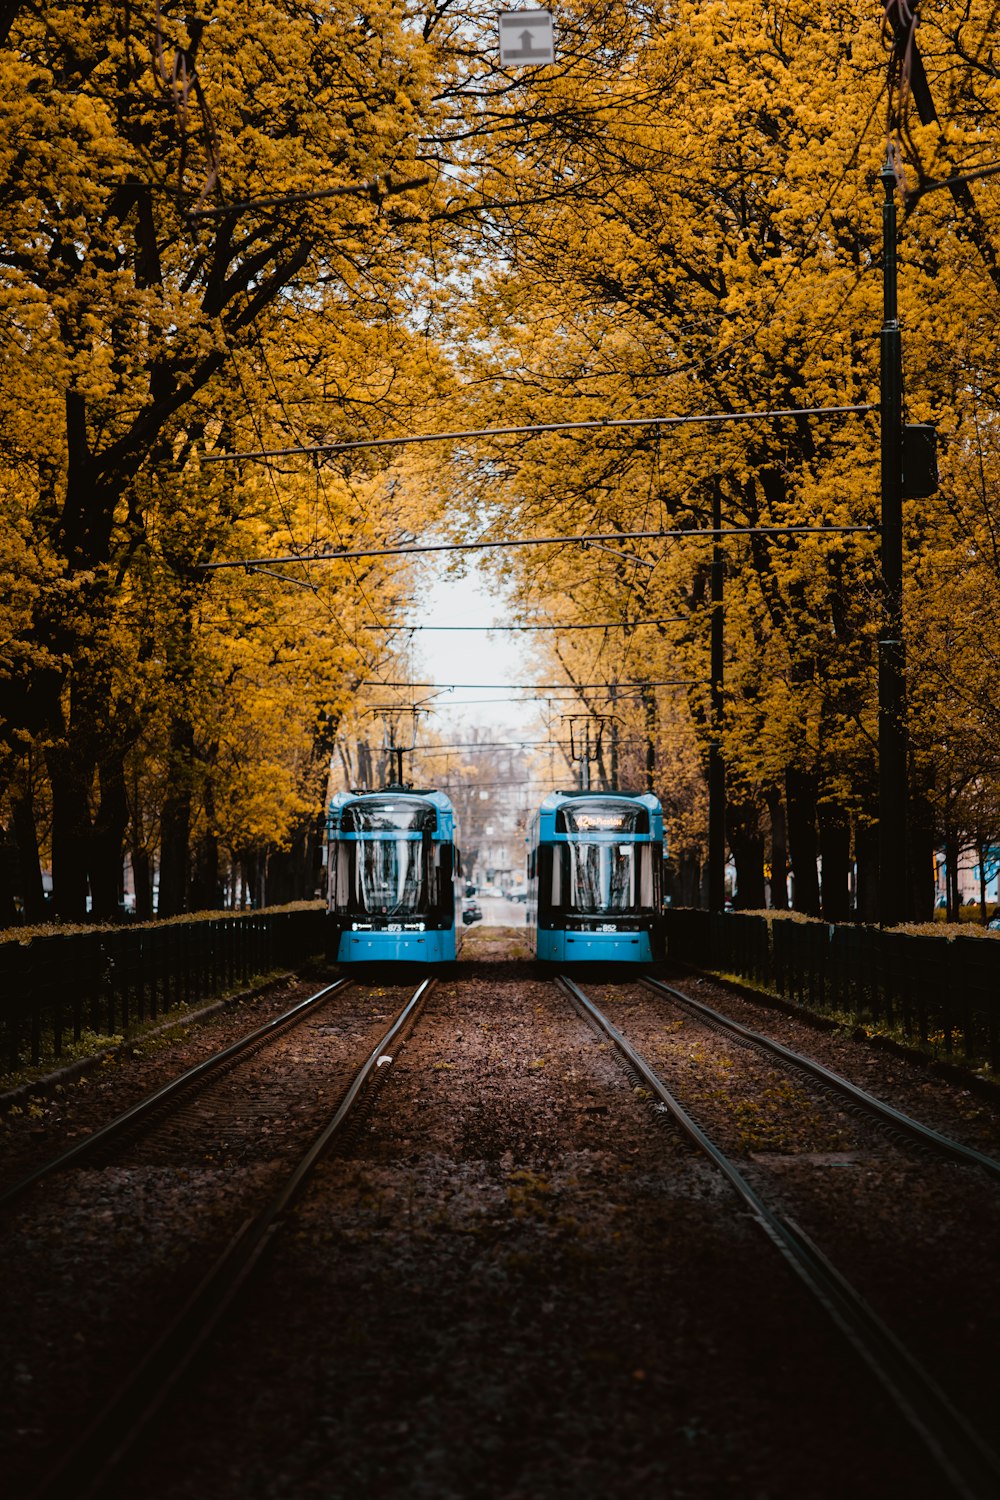 trains on the tracks